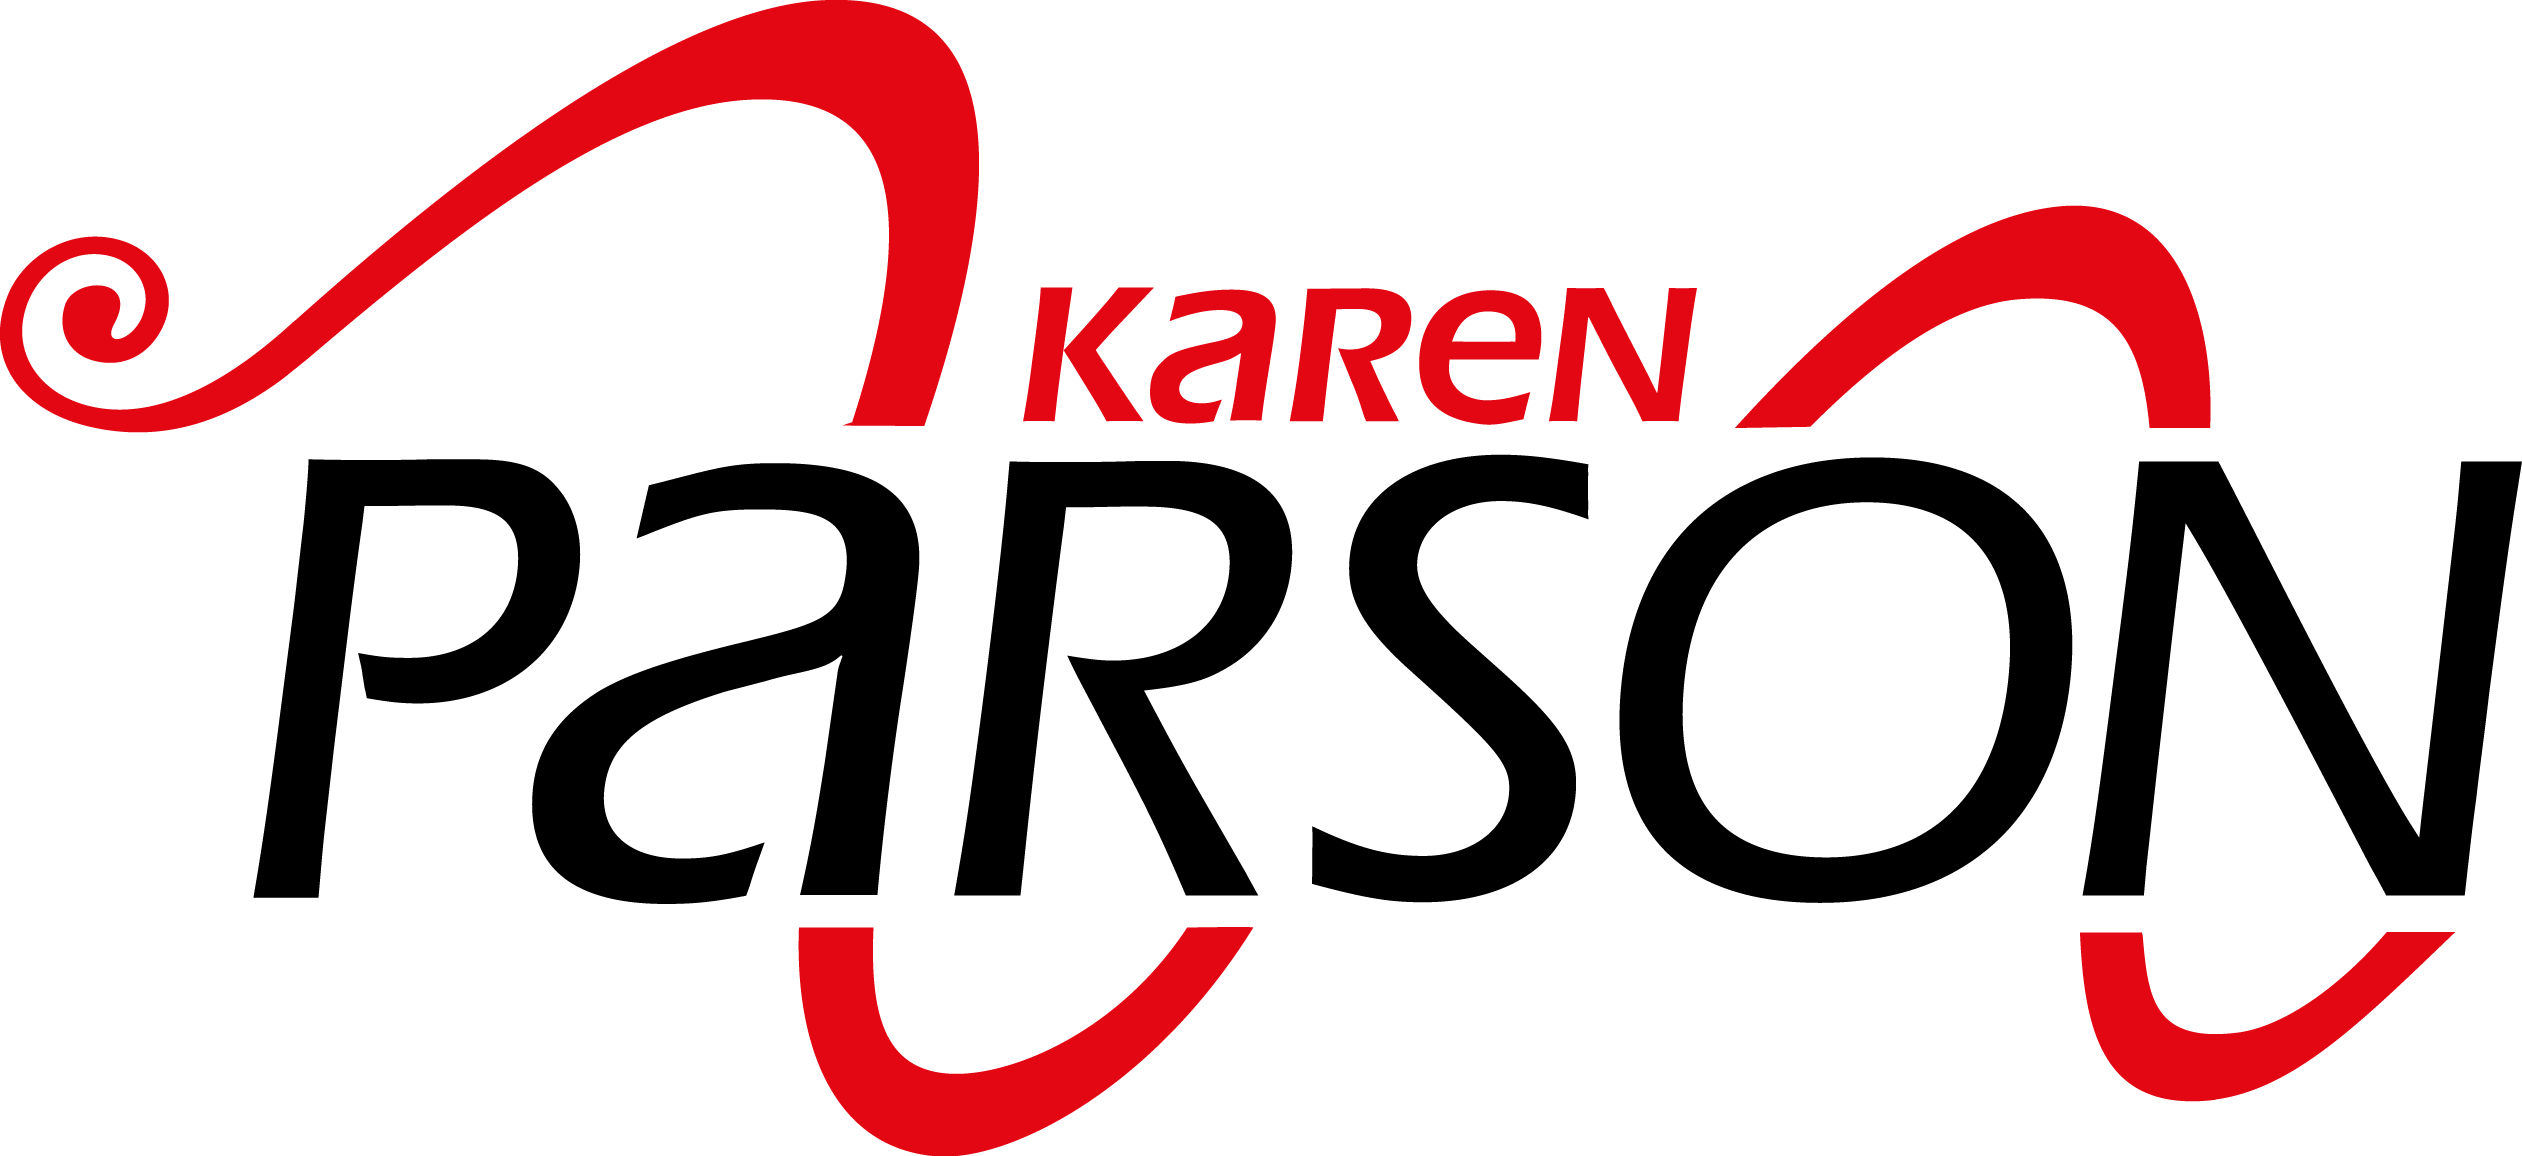 Karen Parson Logo